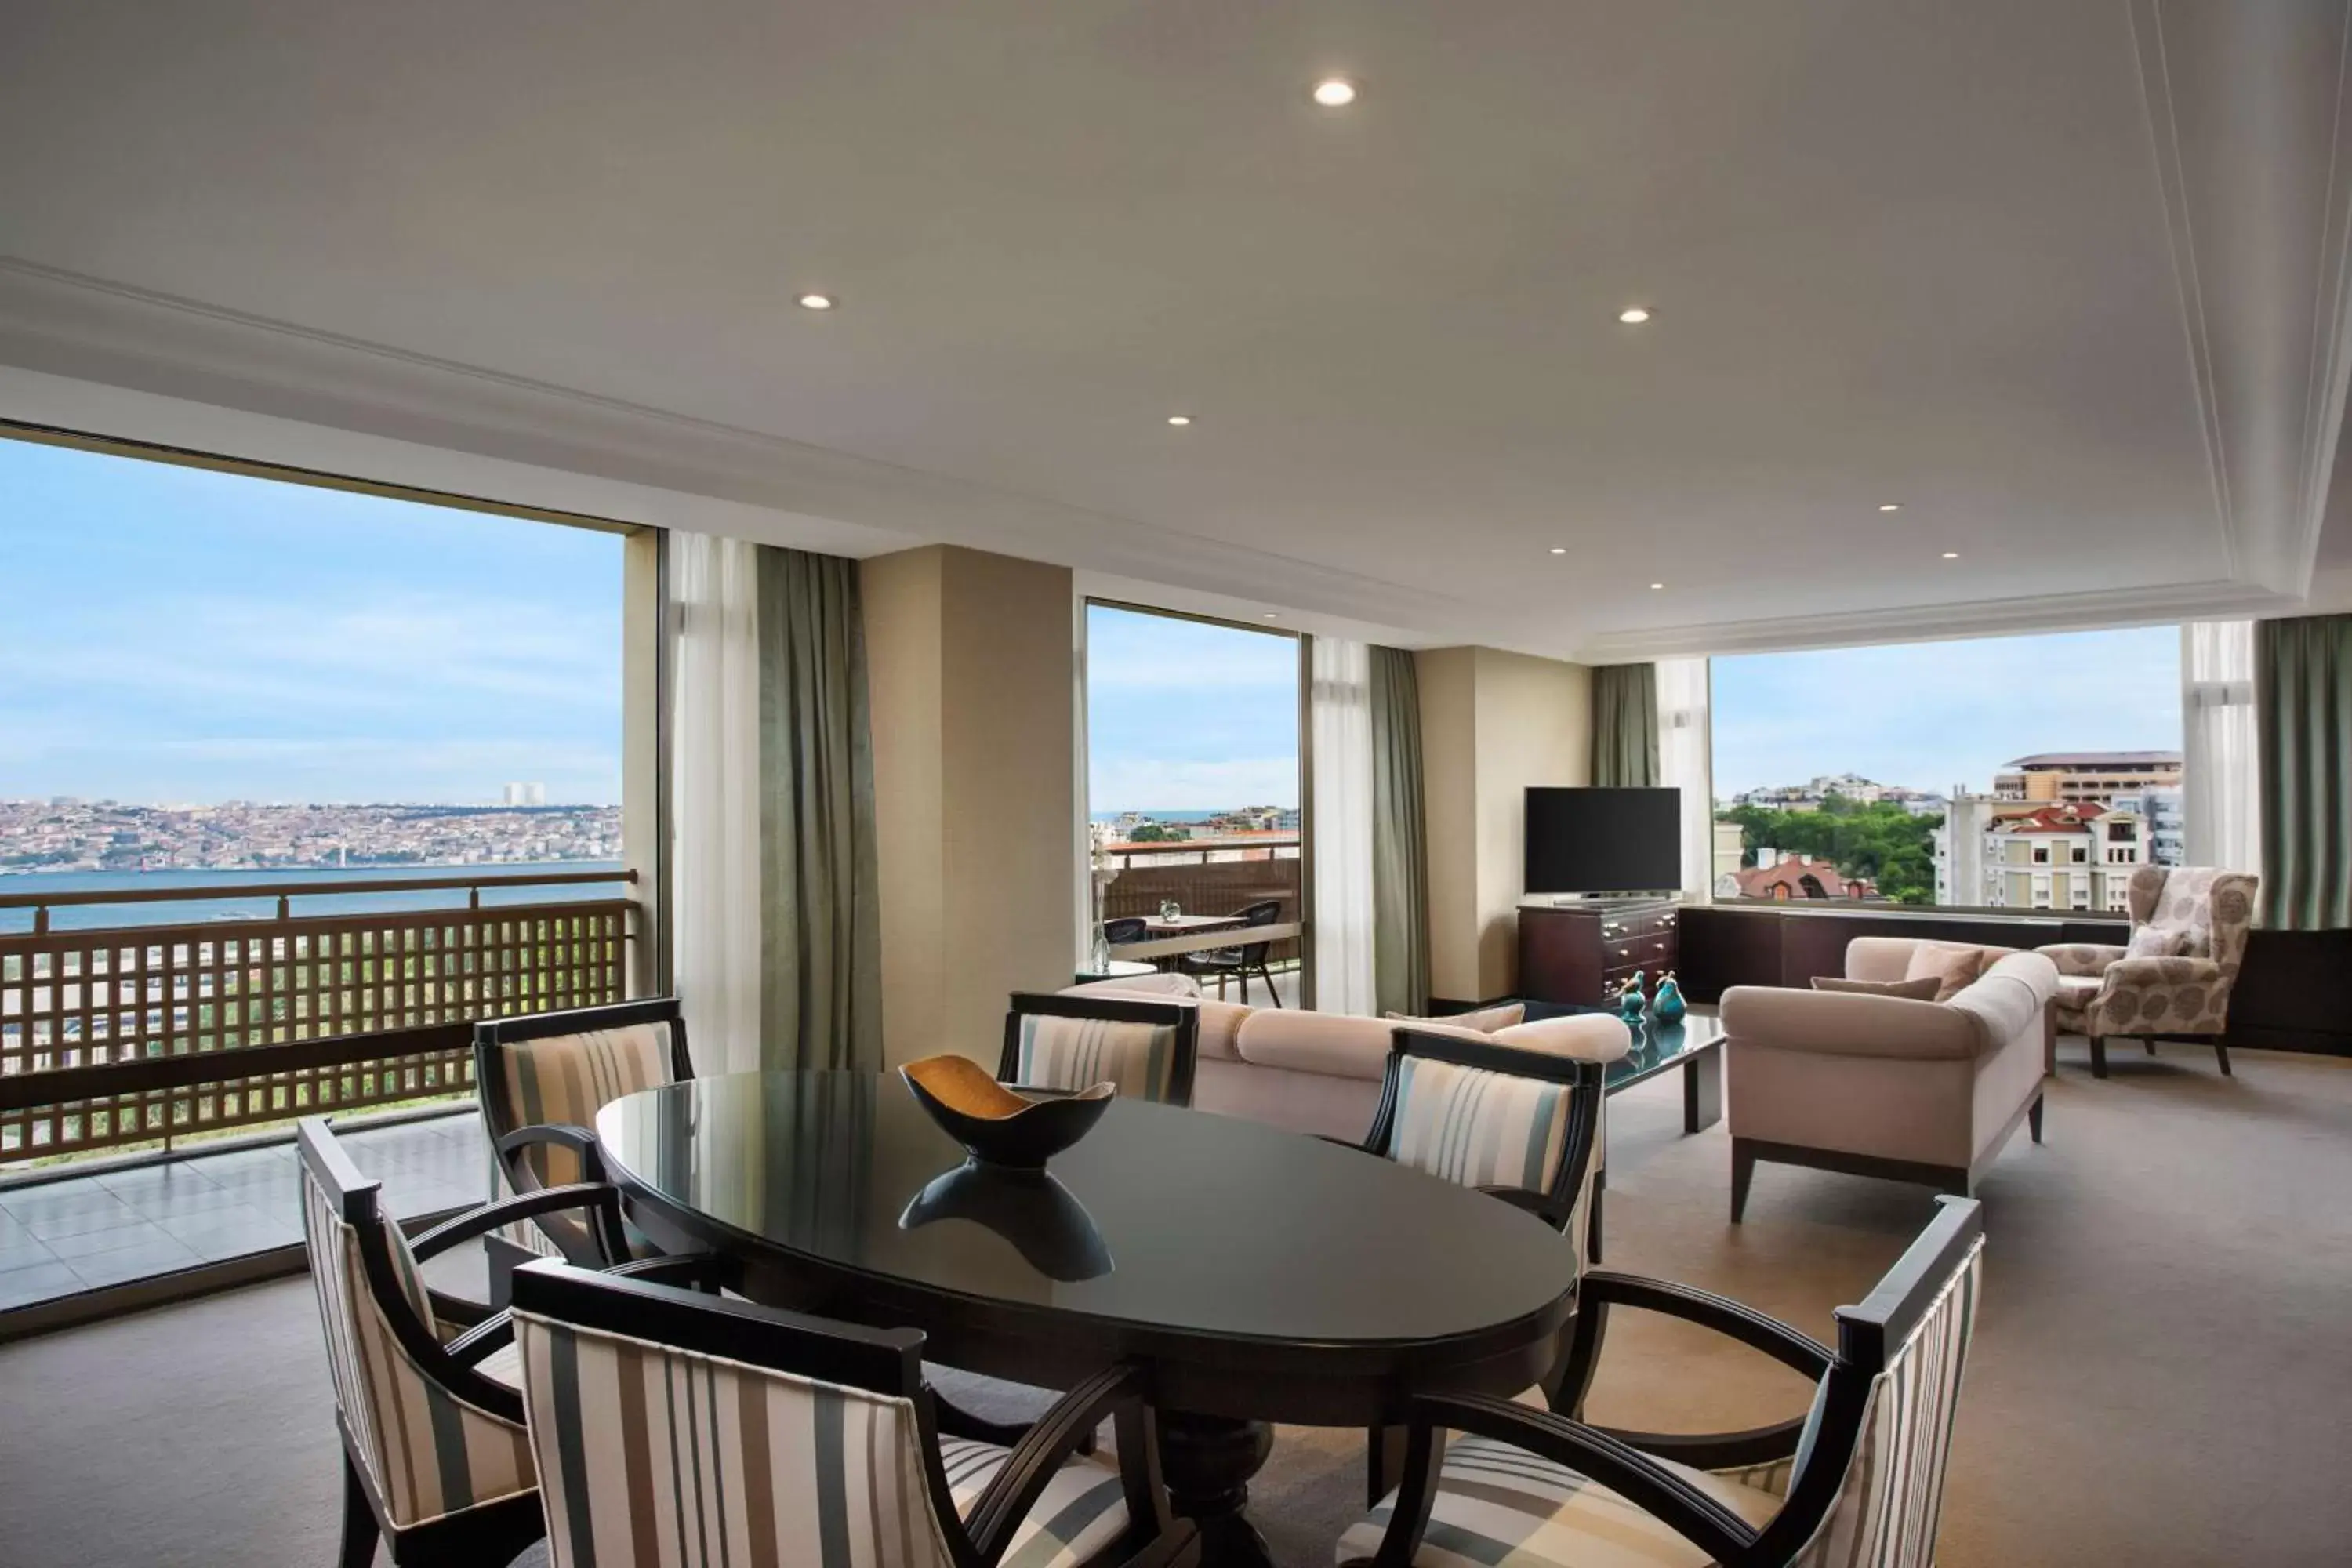 Living room in Hilton Istanbul Bosphorus